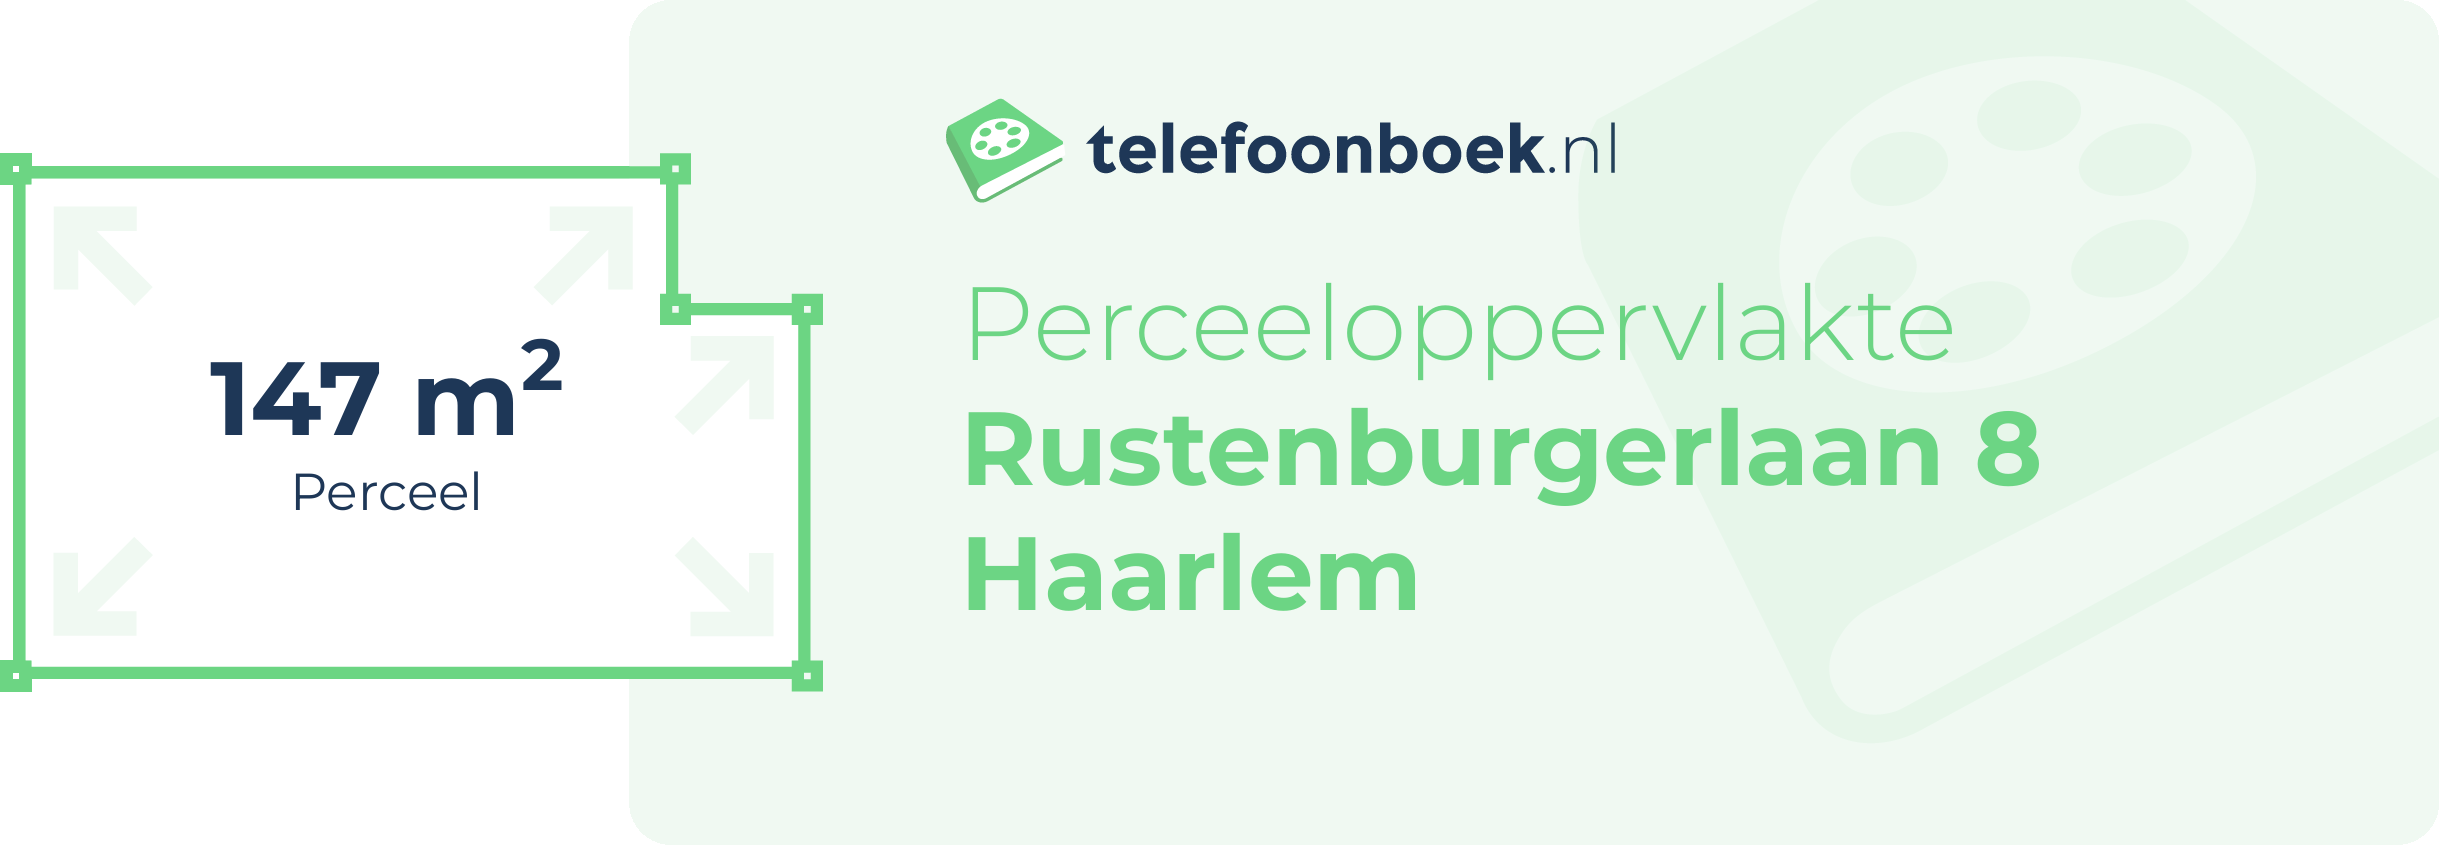 Perceeloppervlakte Rustenburgerlaan 8 Haarlem